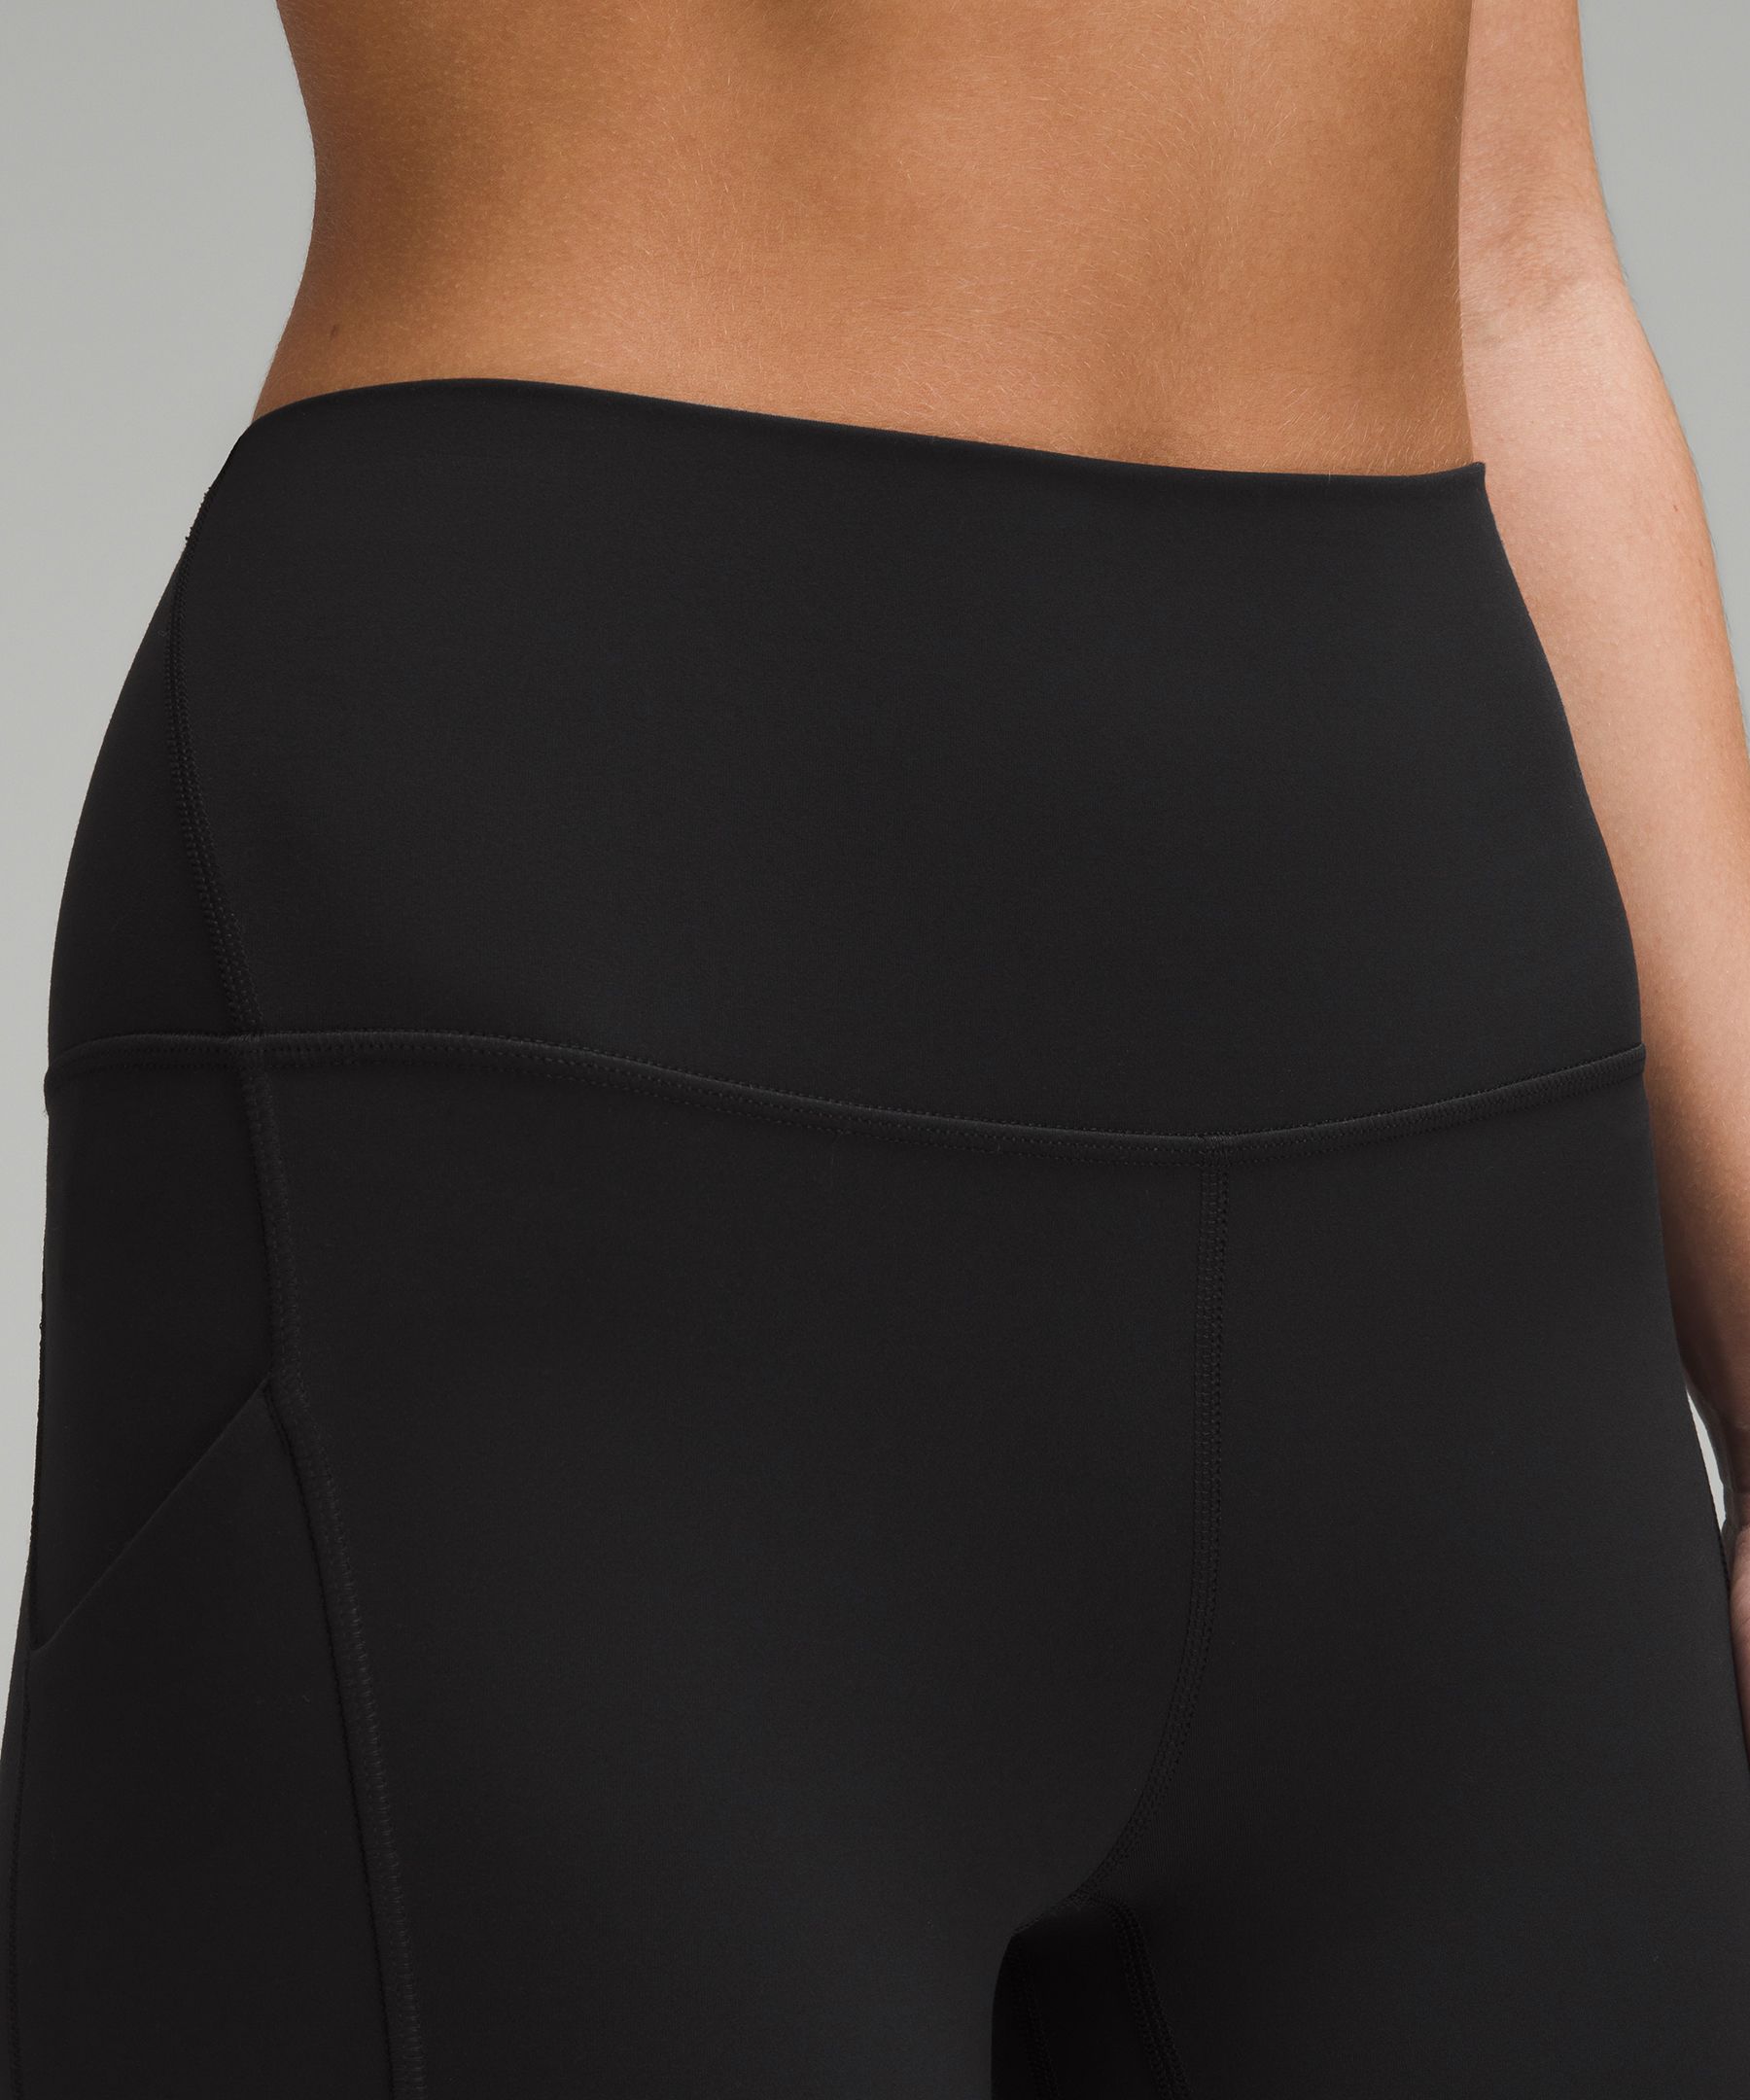 Lululemon Leggings With Side Pockets And Back Pocket Black Size 8 - $69  (46% Off Retail) - From kayla